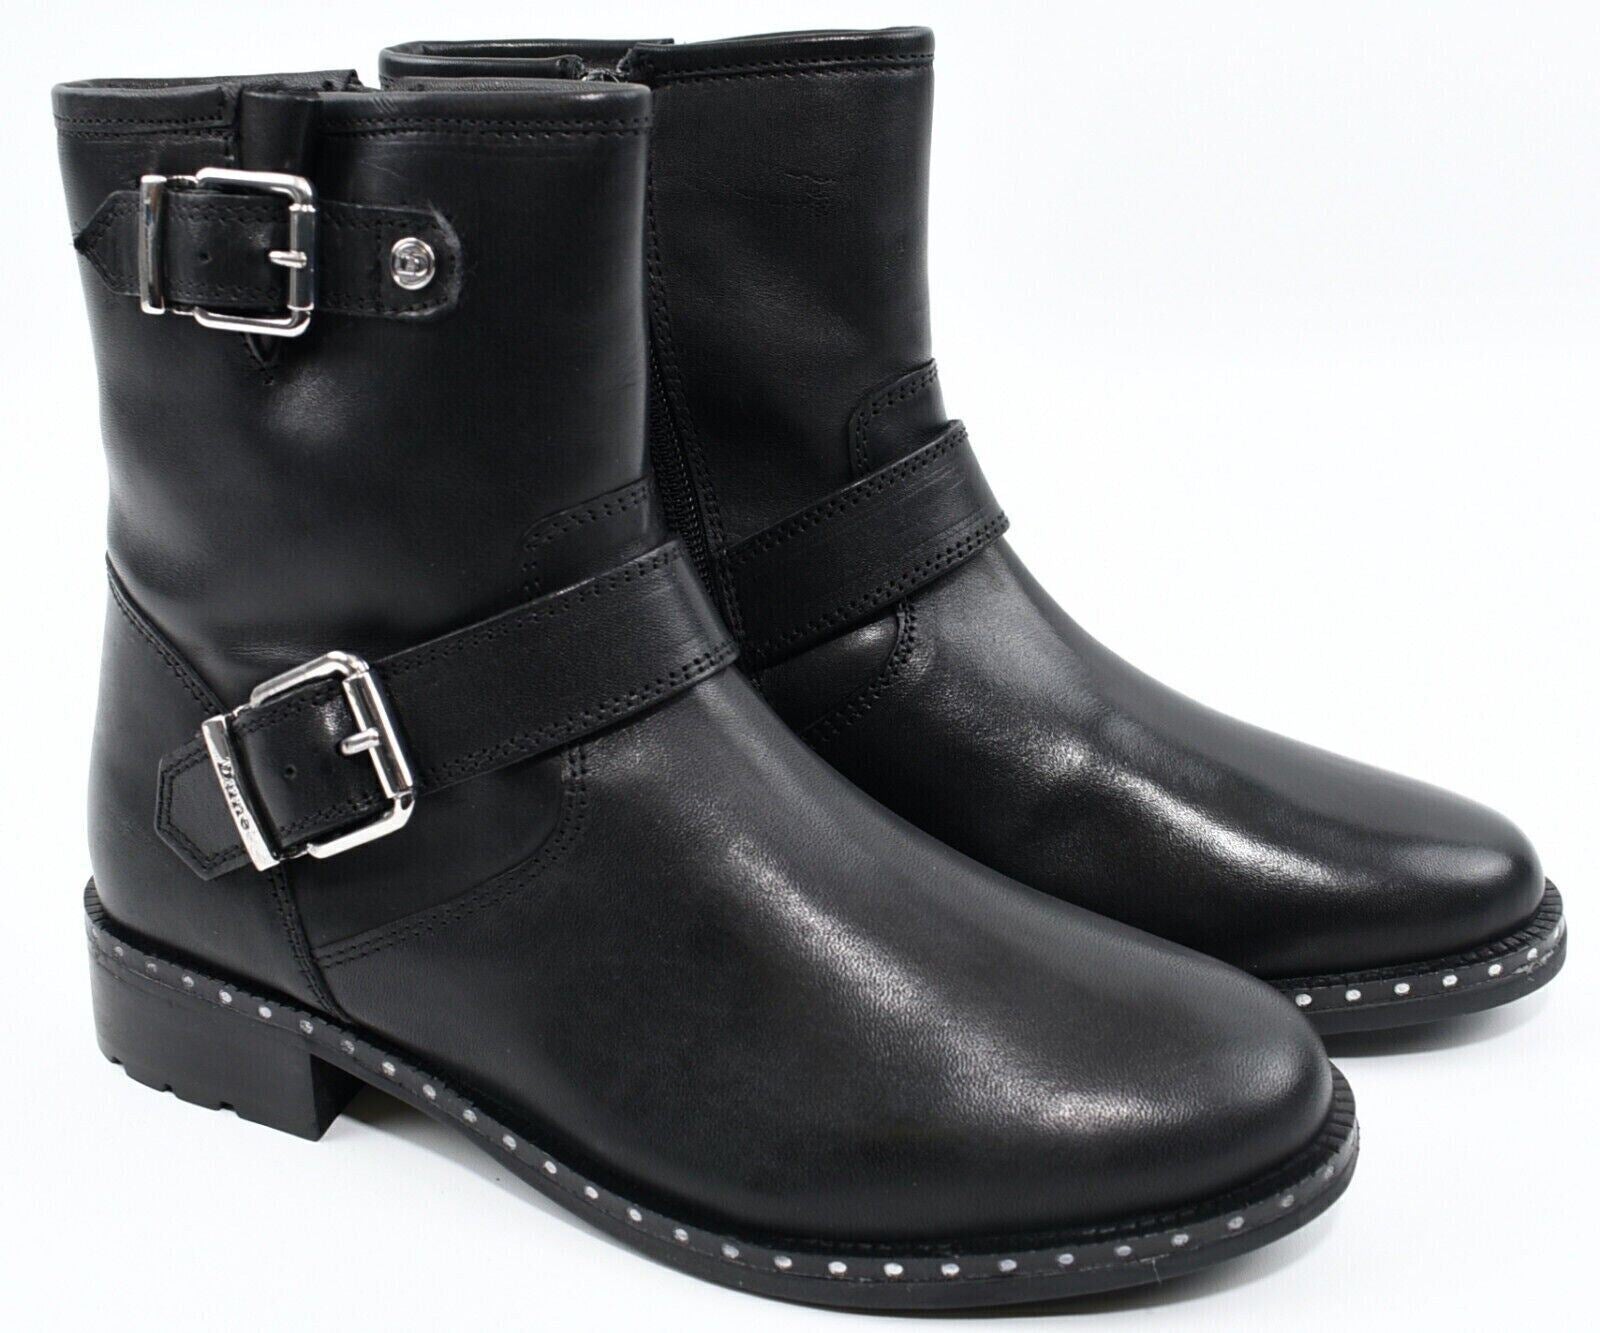 DUNE Women's RIKER 2 Boots, Genuine Leather, Black, size UK 7 /EU 40